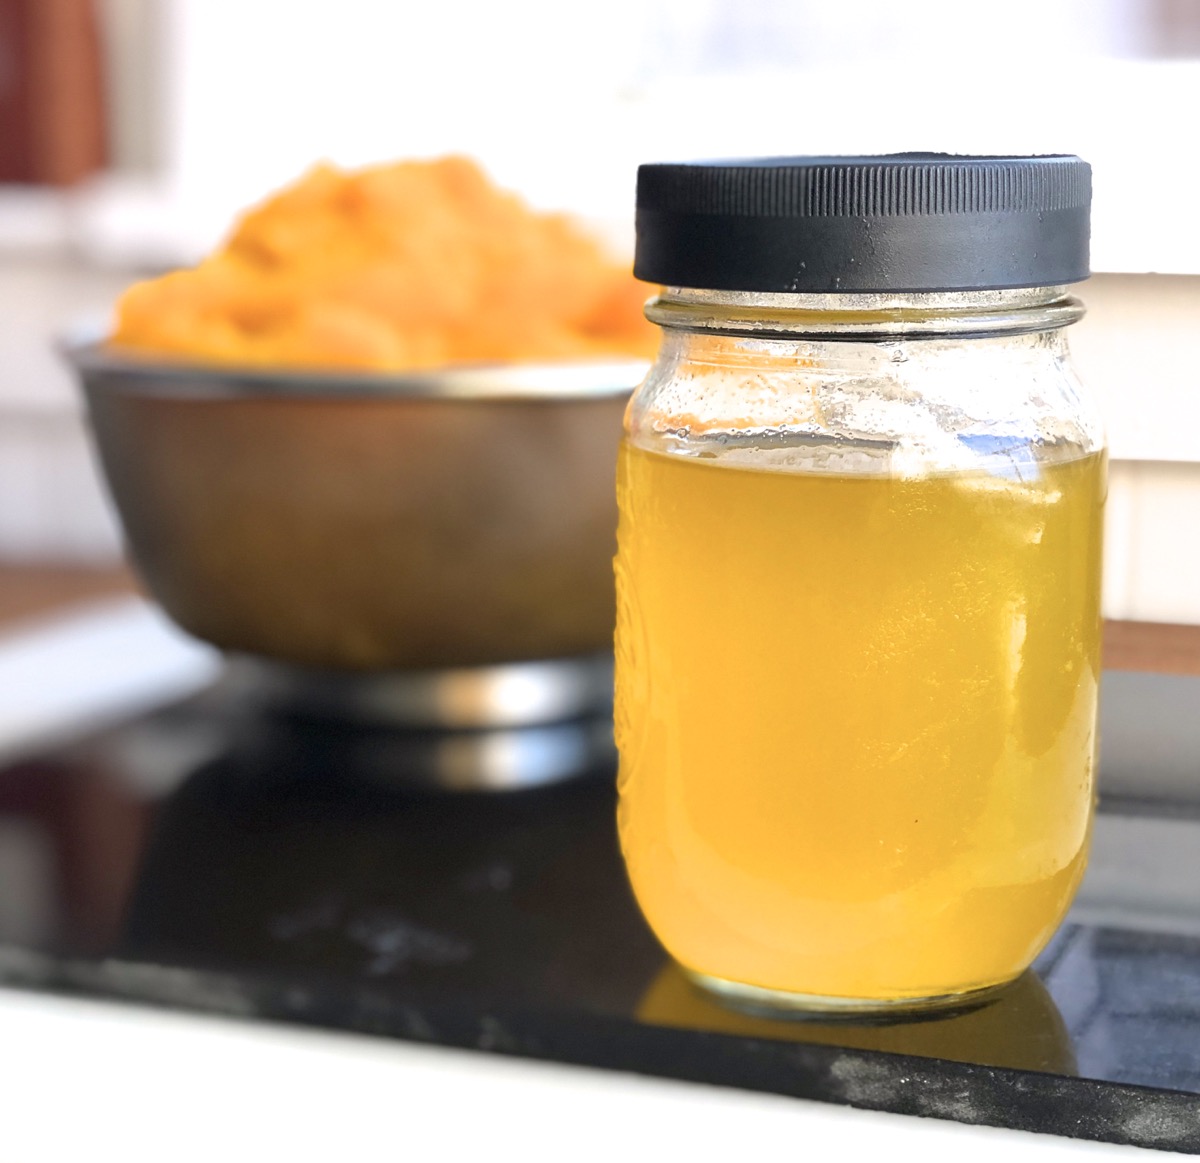 Jar of golden-orange liquid drained from pumpkin purée.